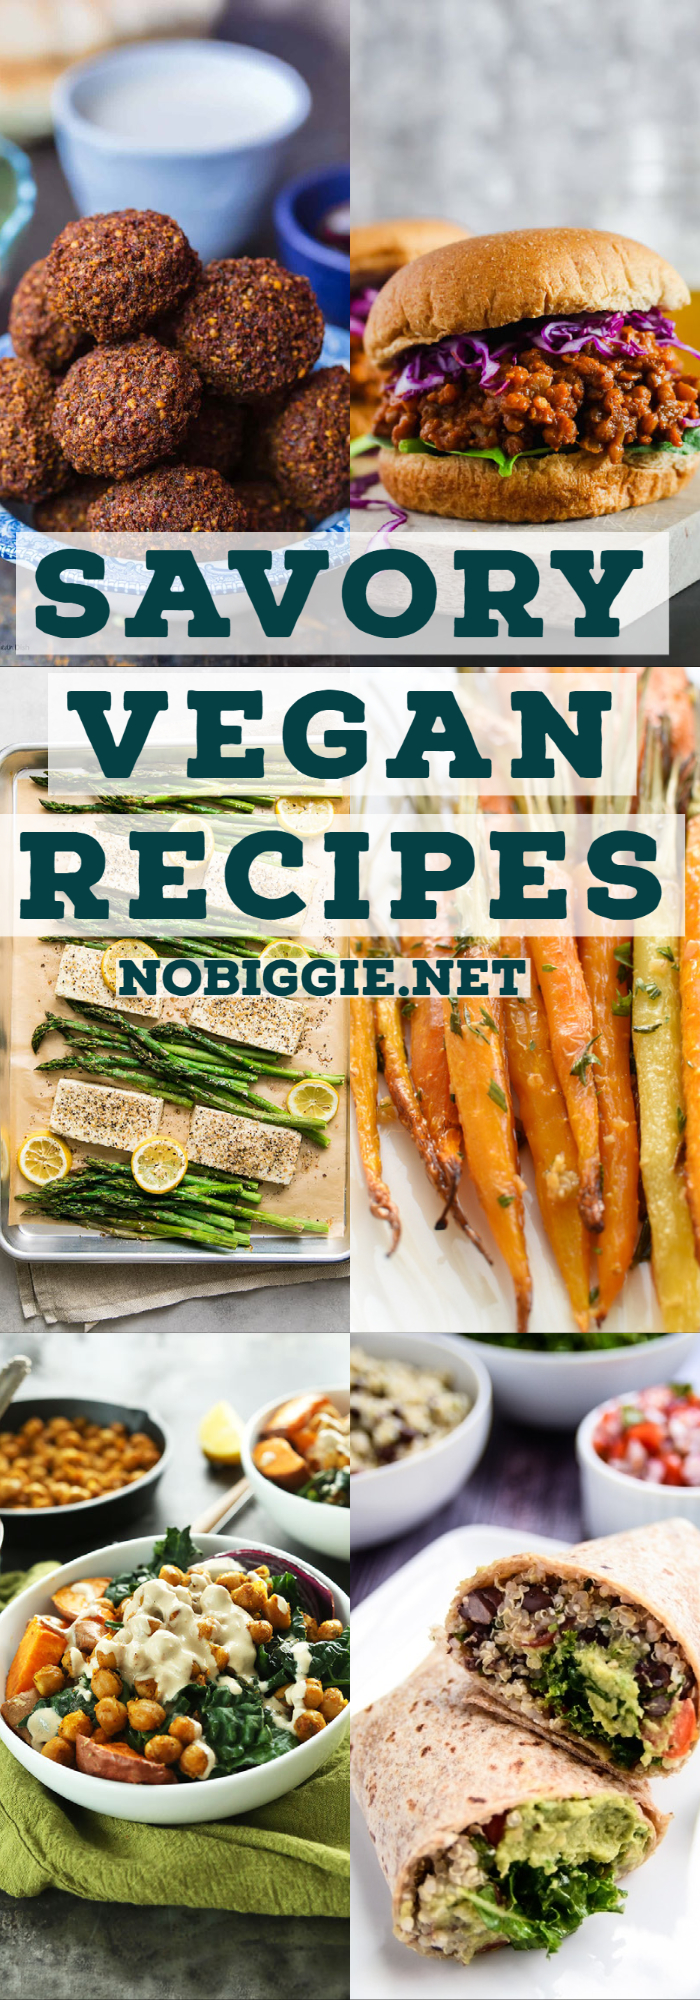 25+ Savory Vegan Recipes | NoBiggie.net